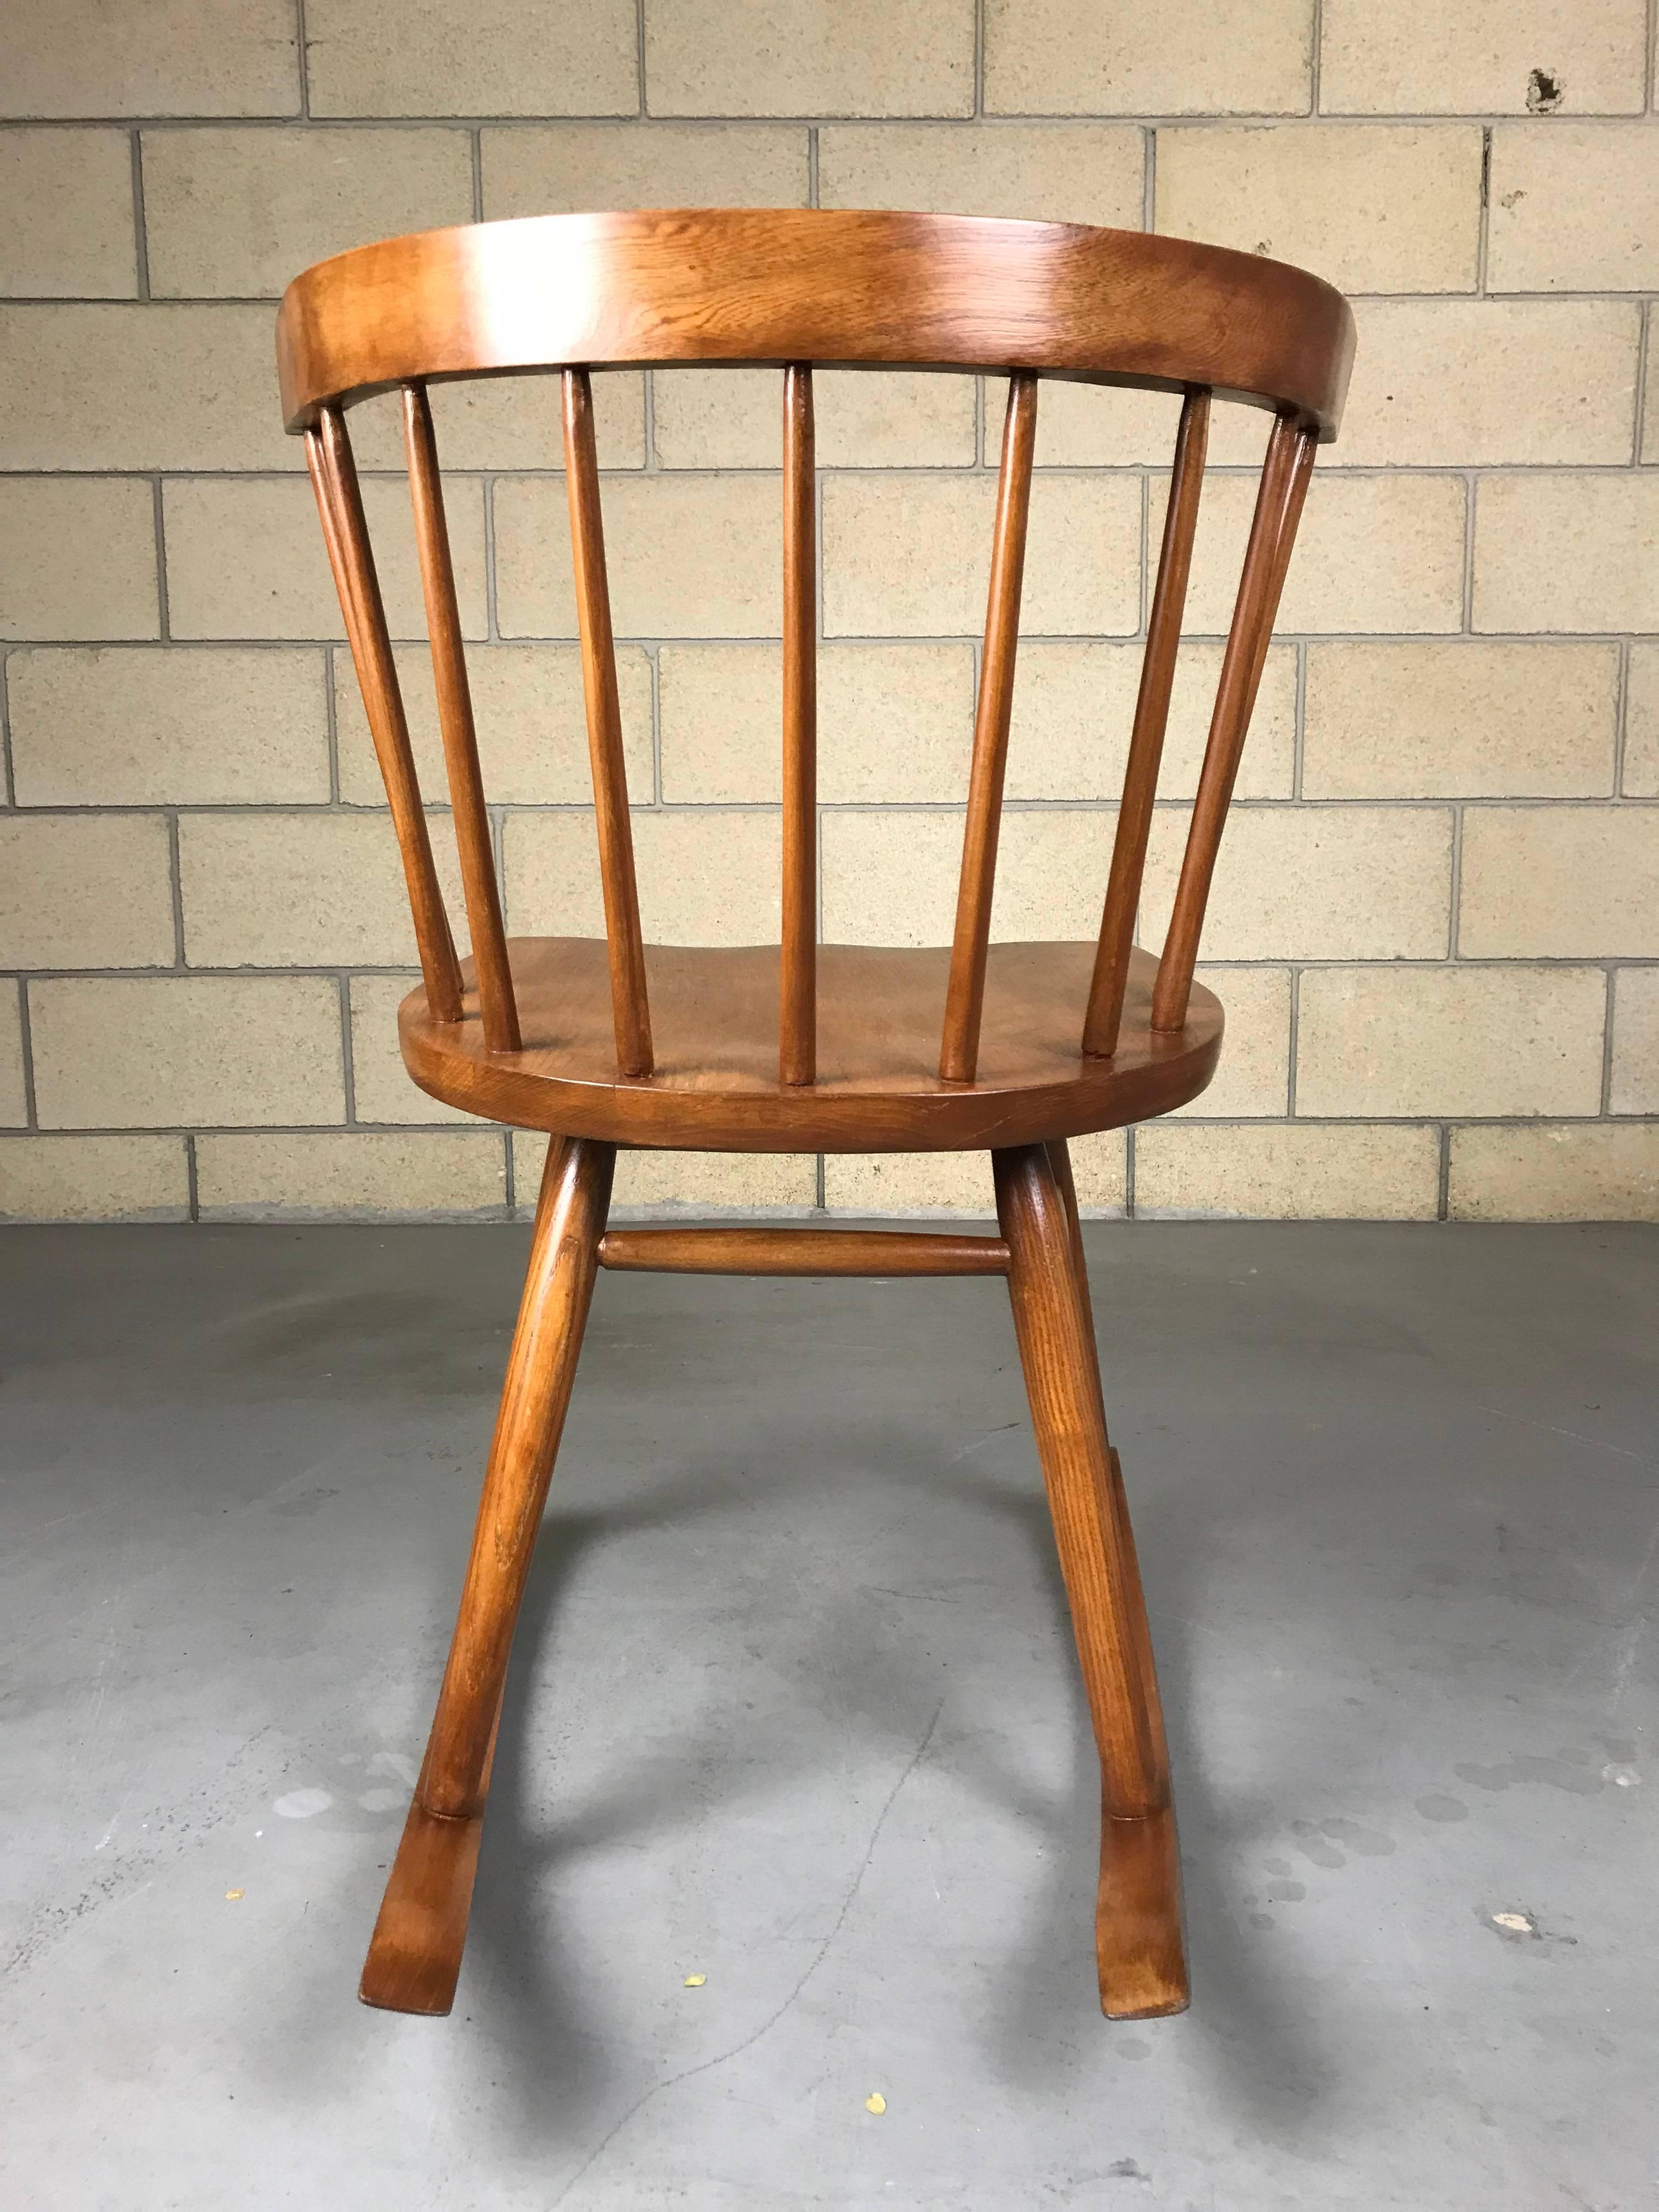 English Mid-Century Modern Petite Windsor Rocking Chair by Ercol Furniture, circa 1950s